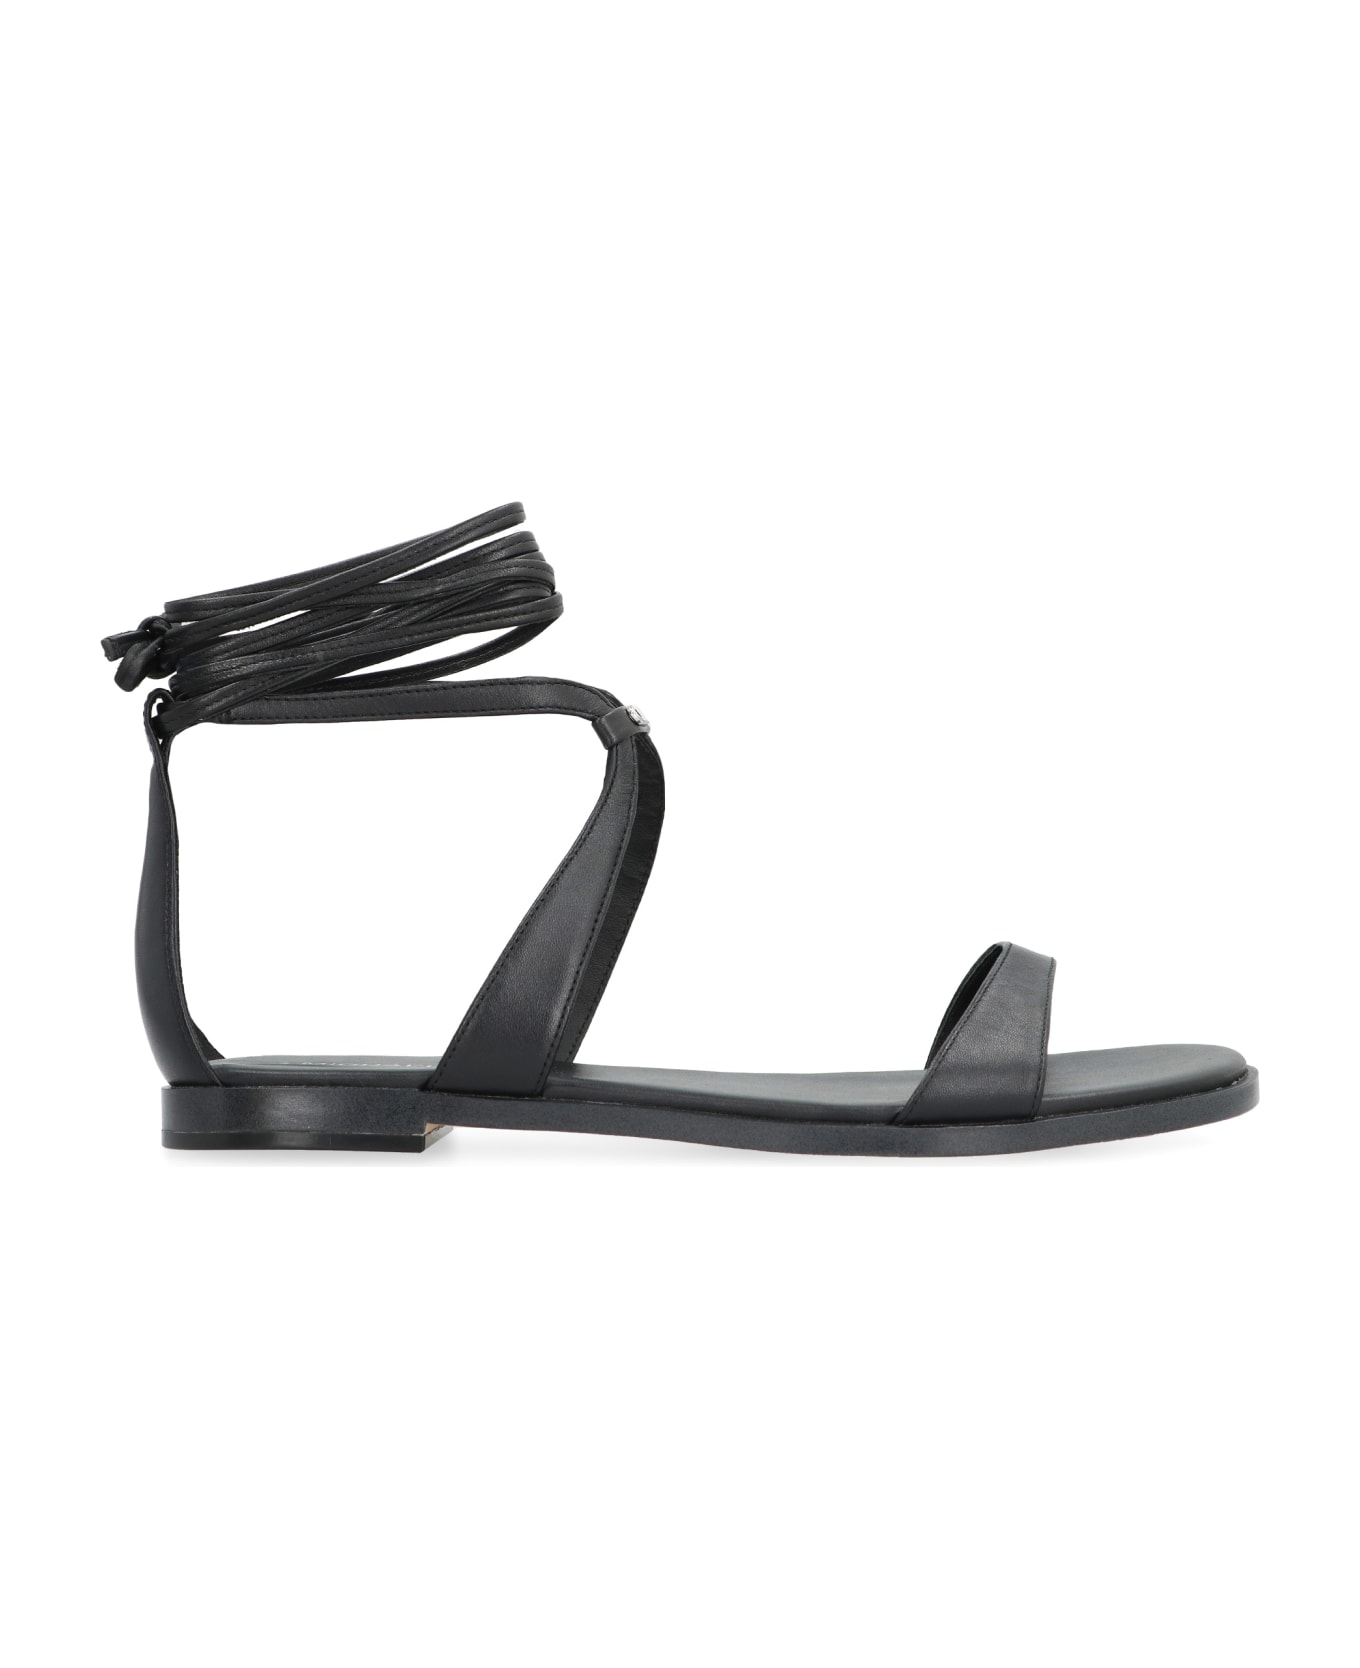 Michael Kors Amara Leather Flat Sandals - black フラットシューズ